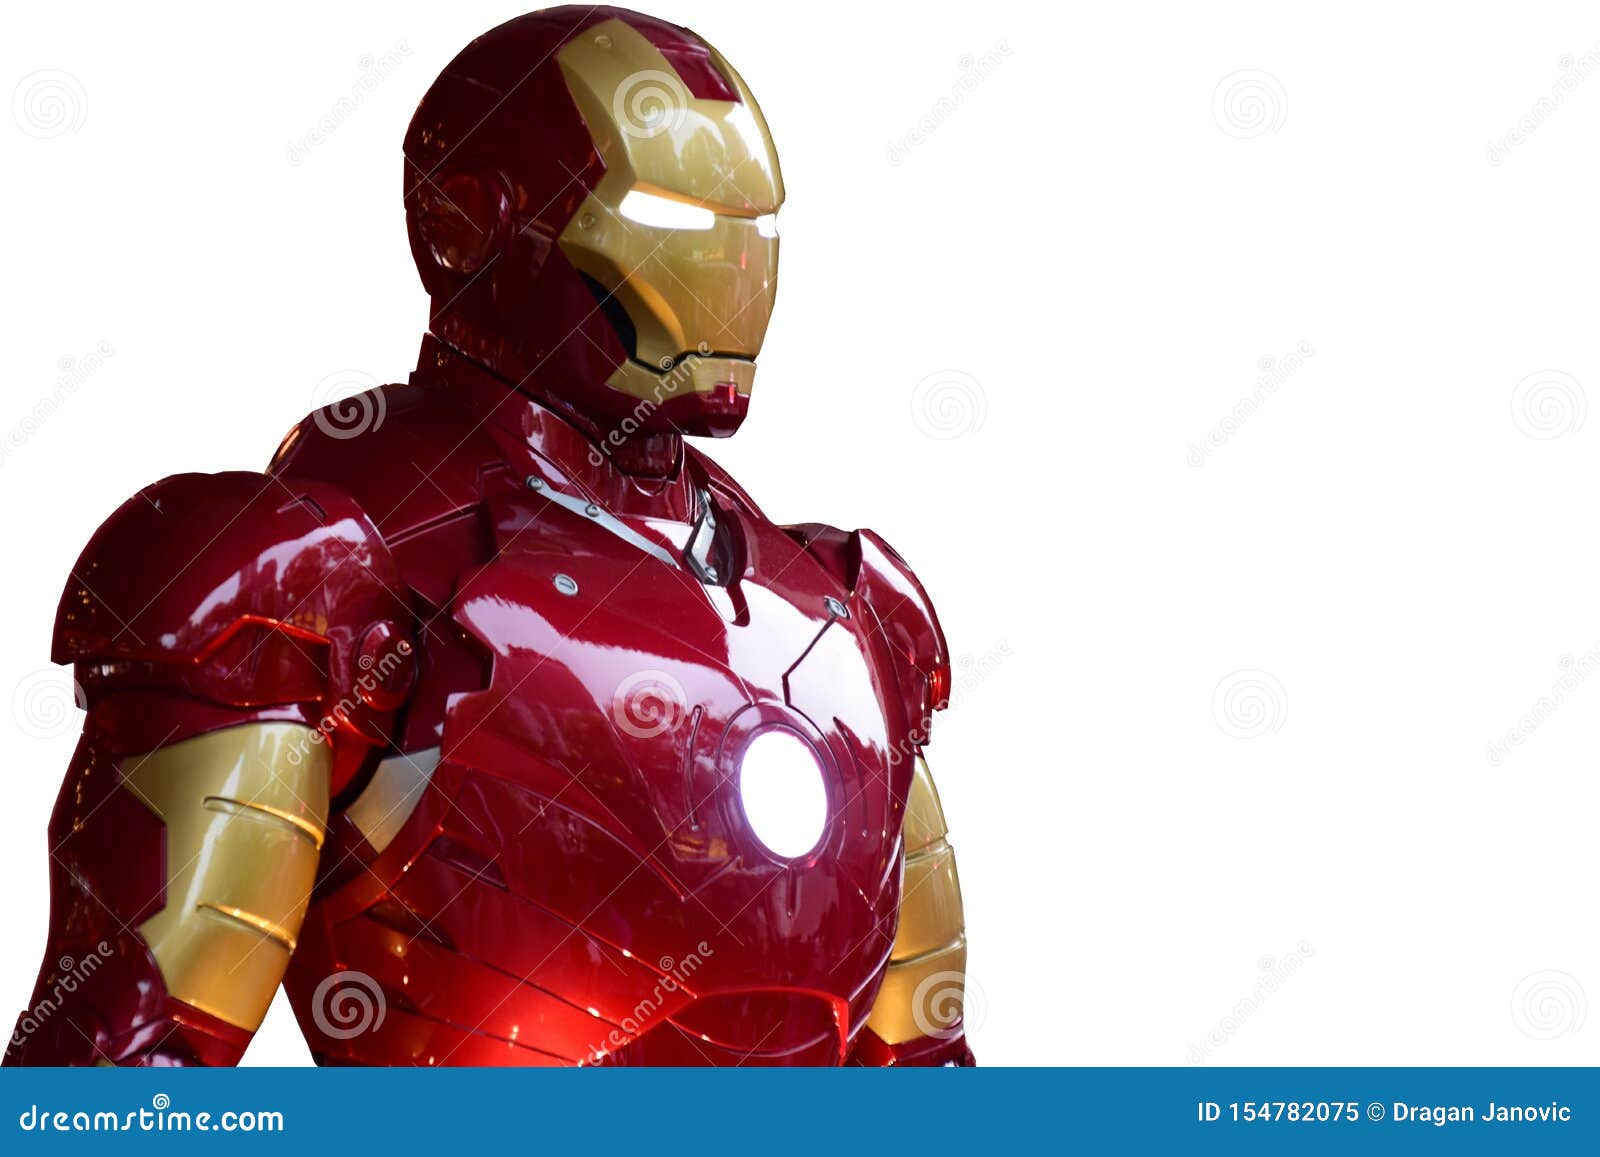 9 240 Iron Man White Background Photos Free Royalty Free Stock Photos From Dreamstime